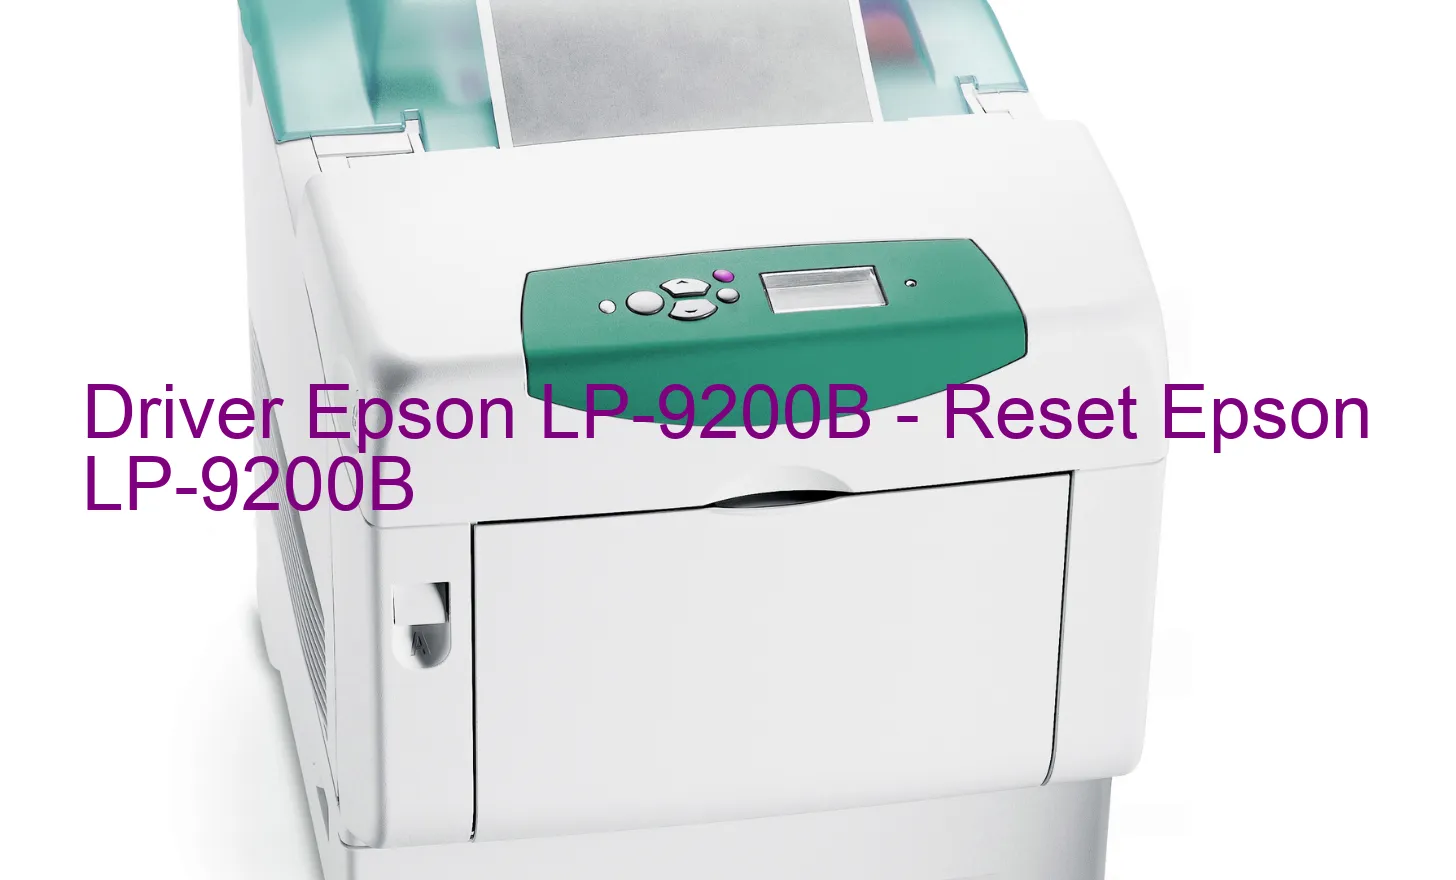 Epson LP-9200Bのドライバー、Epson LP-9200Bのリセットソフトウェア